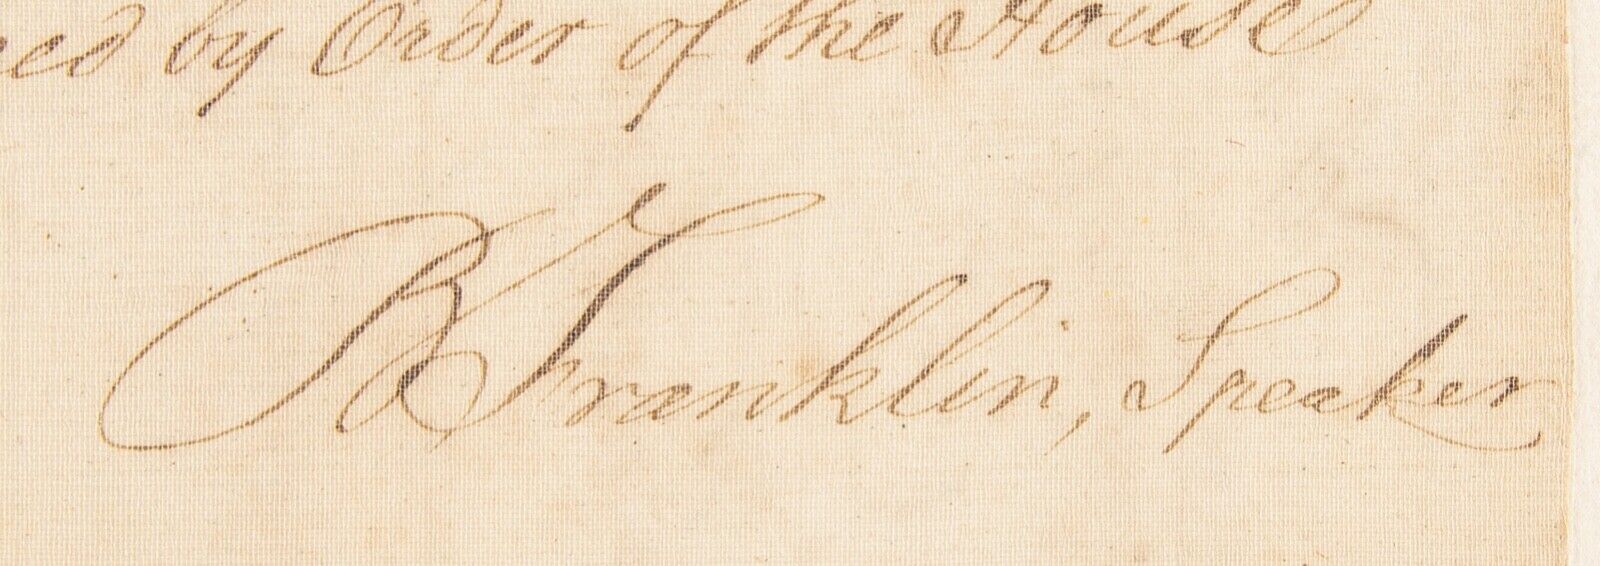 Benjamin Franklin Signed  Multipage Document 1764 with PSA